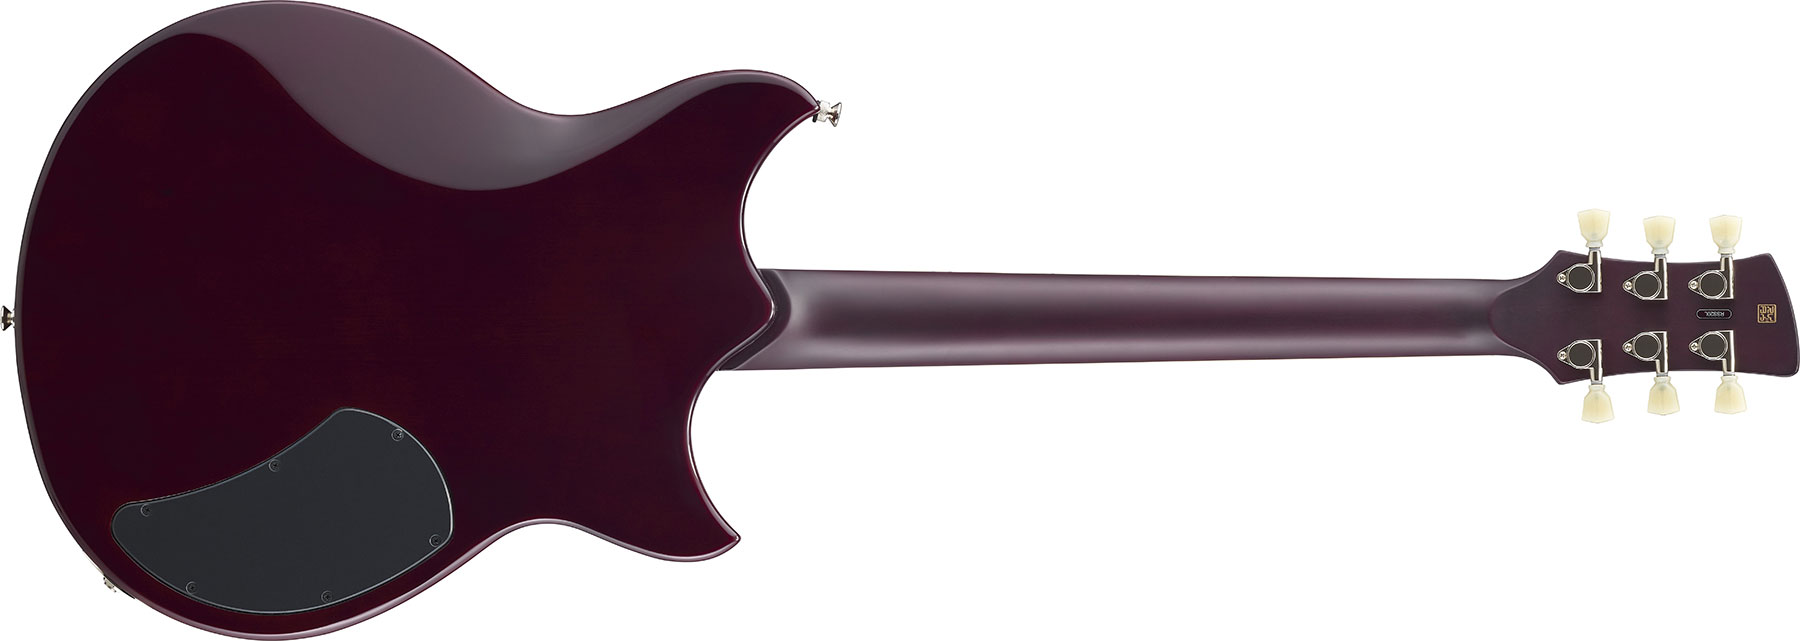 Yamaha Rss20l Revstar Standard Lh Gaucher Hh Ht Rw - Swift Blue - Linkshandige elektrische gitaar - Variation 2